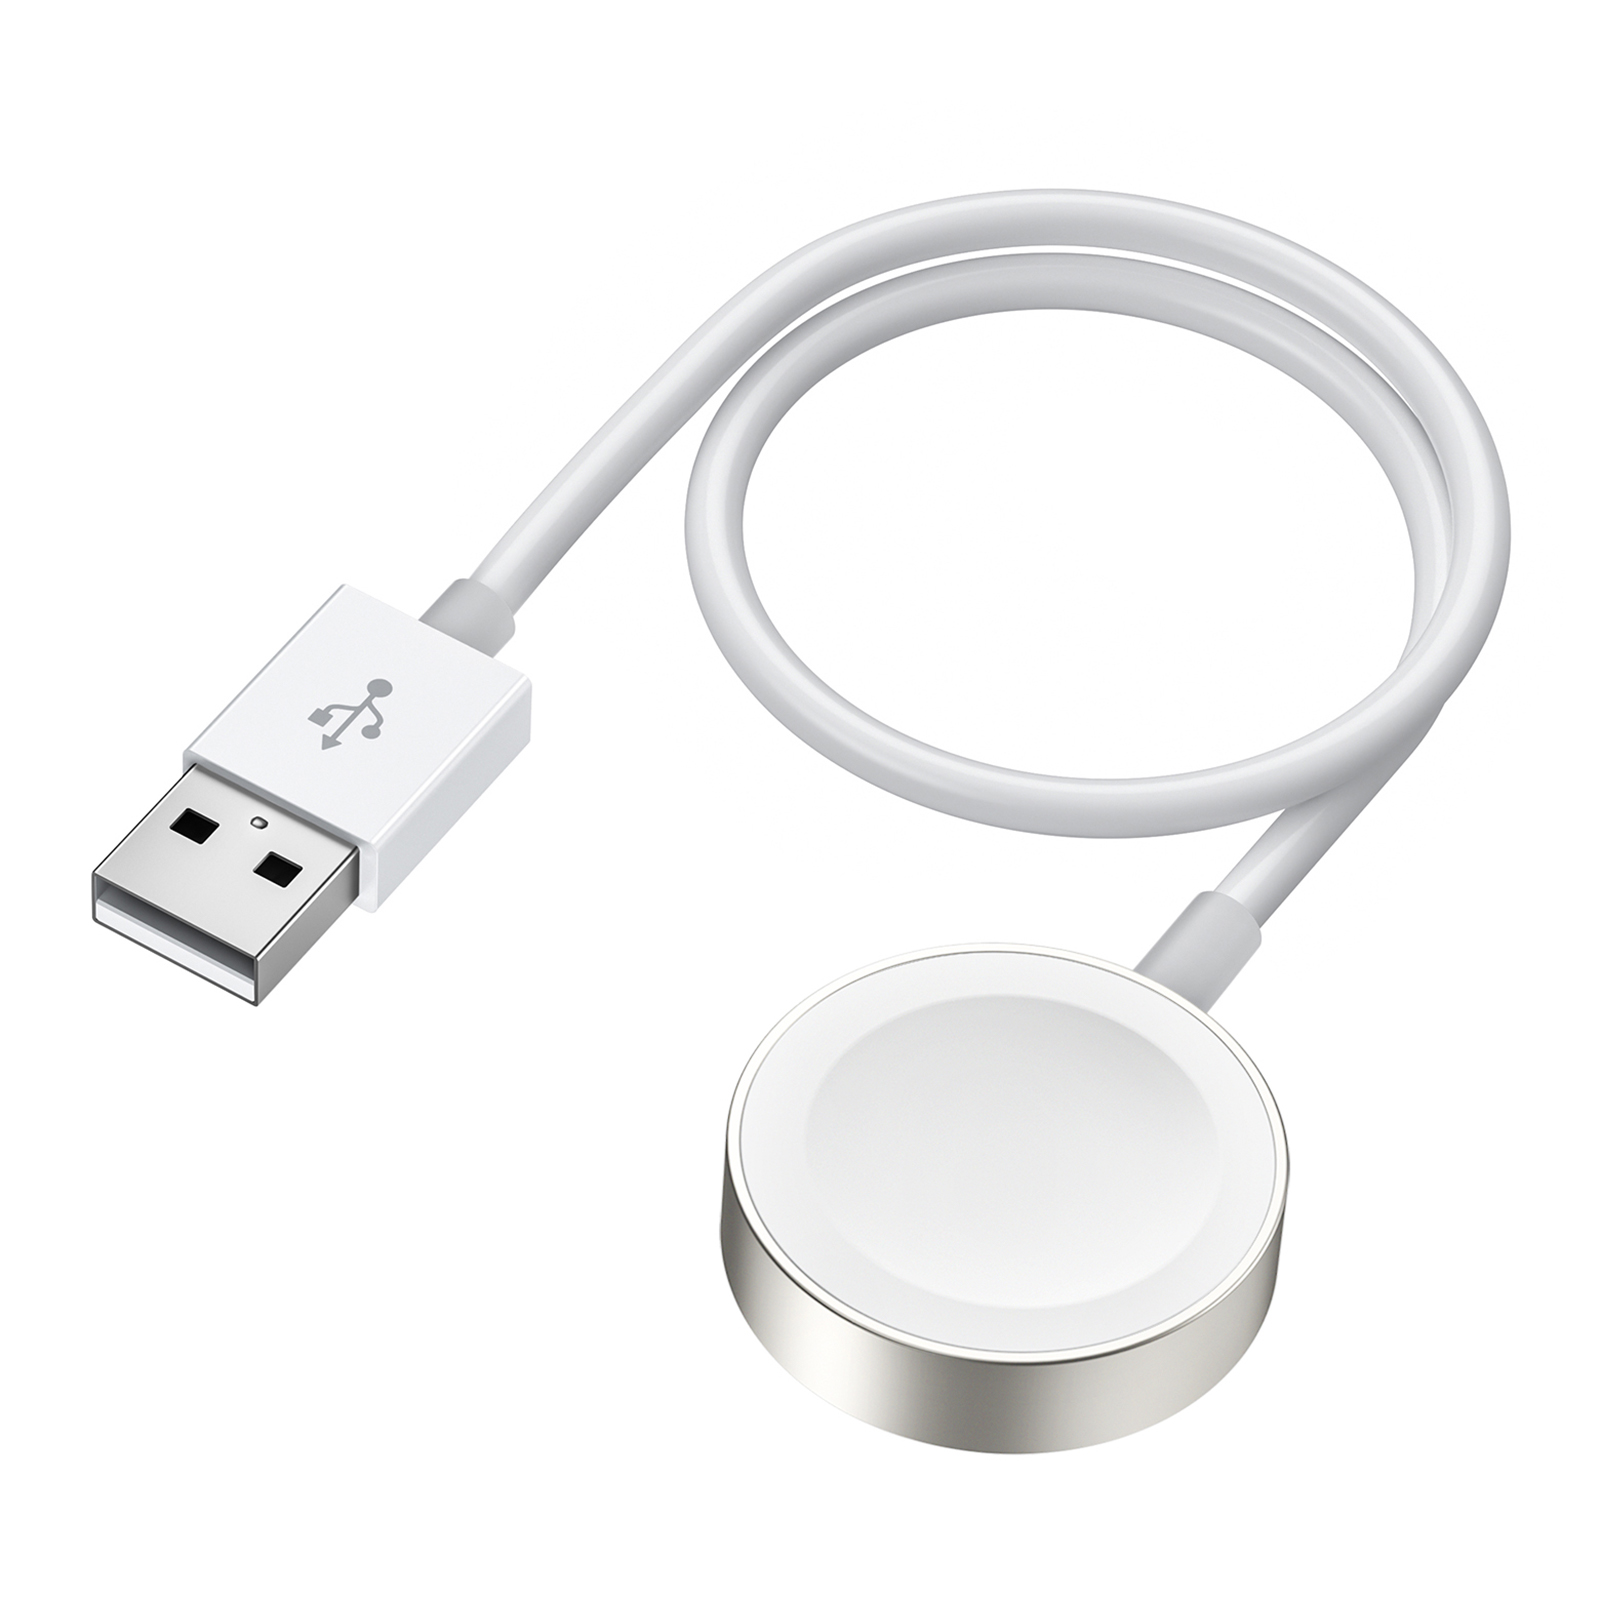 Зарядное USB устройство JOYROOM 30см для Apple Watch - белое